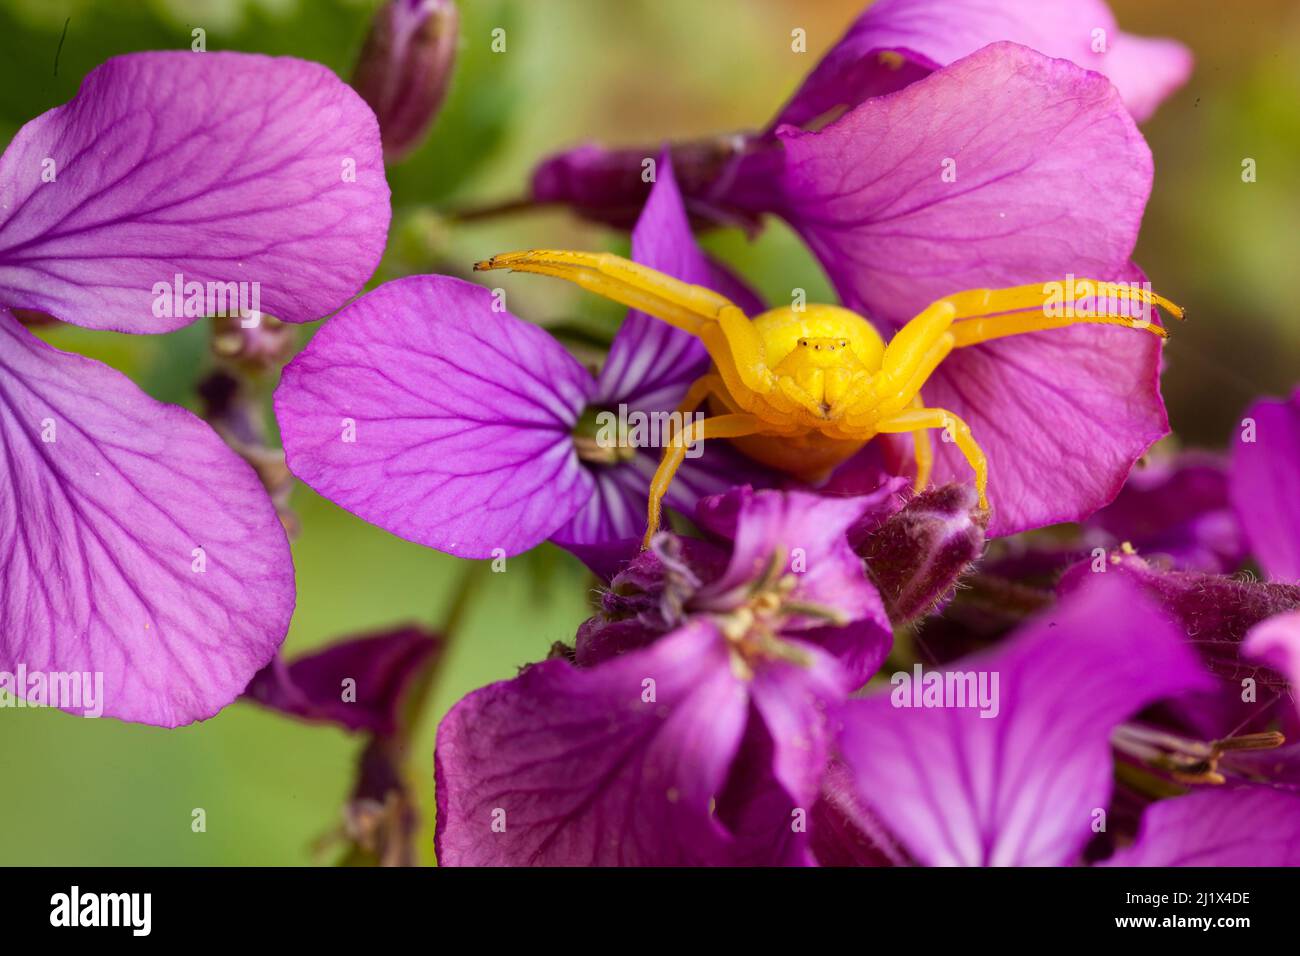 Flower crab spider (Misumena vatia) in hunting pose on Honesty flowers, April, Bristol, UK Stock Photo